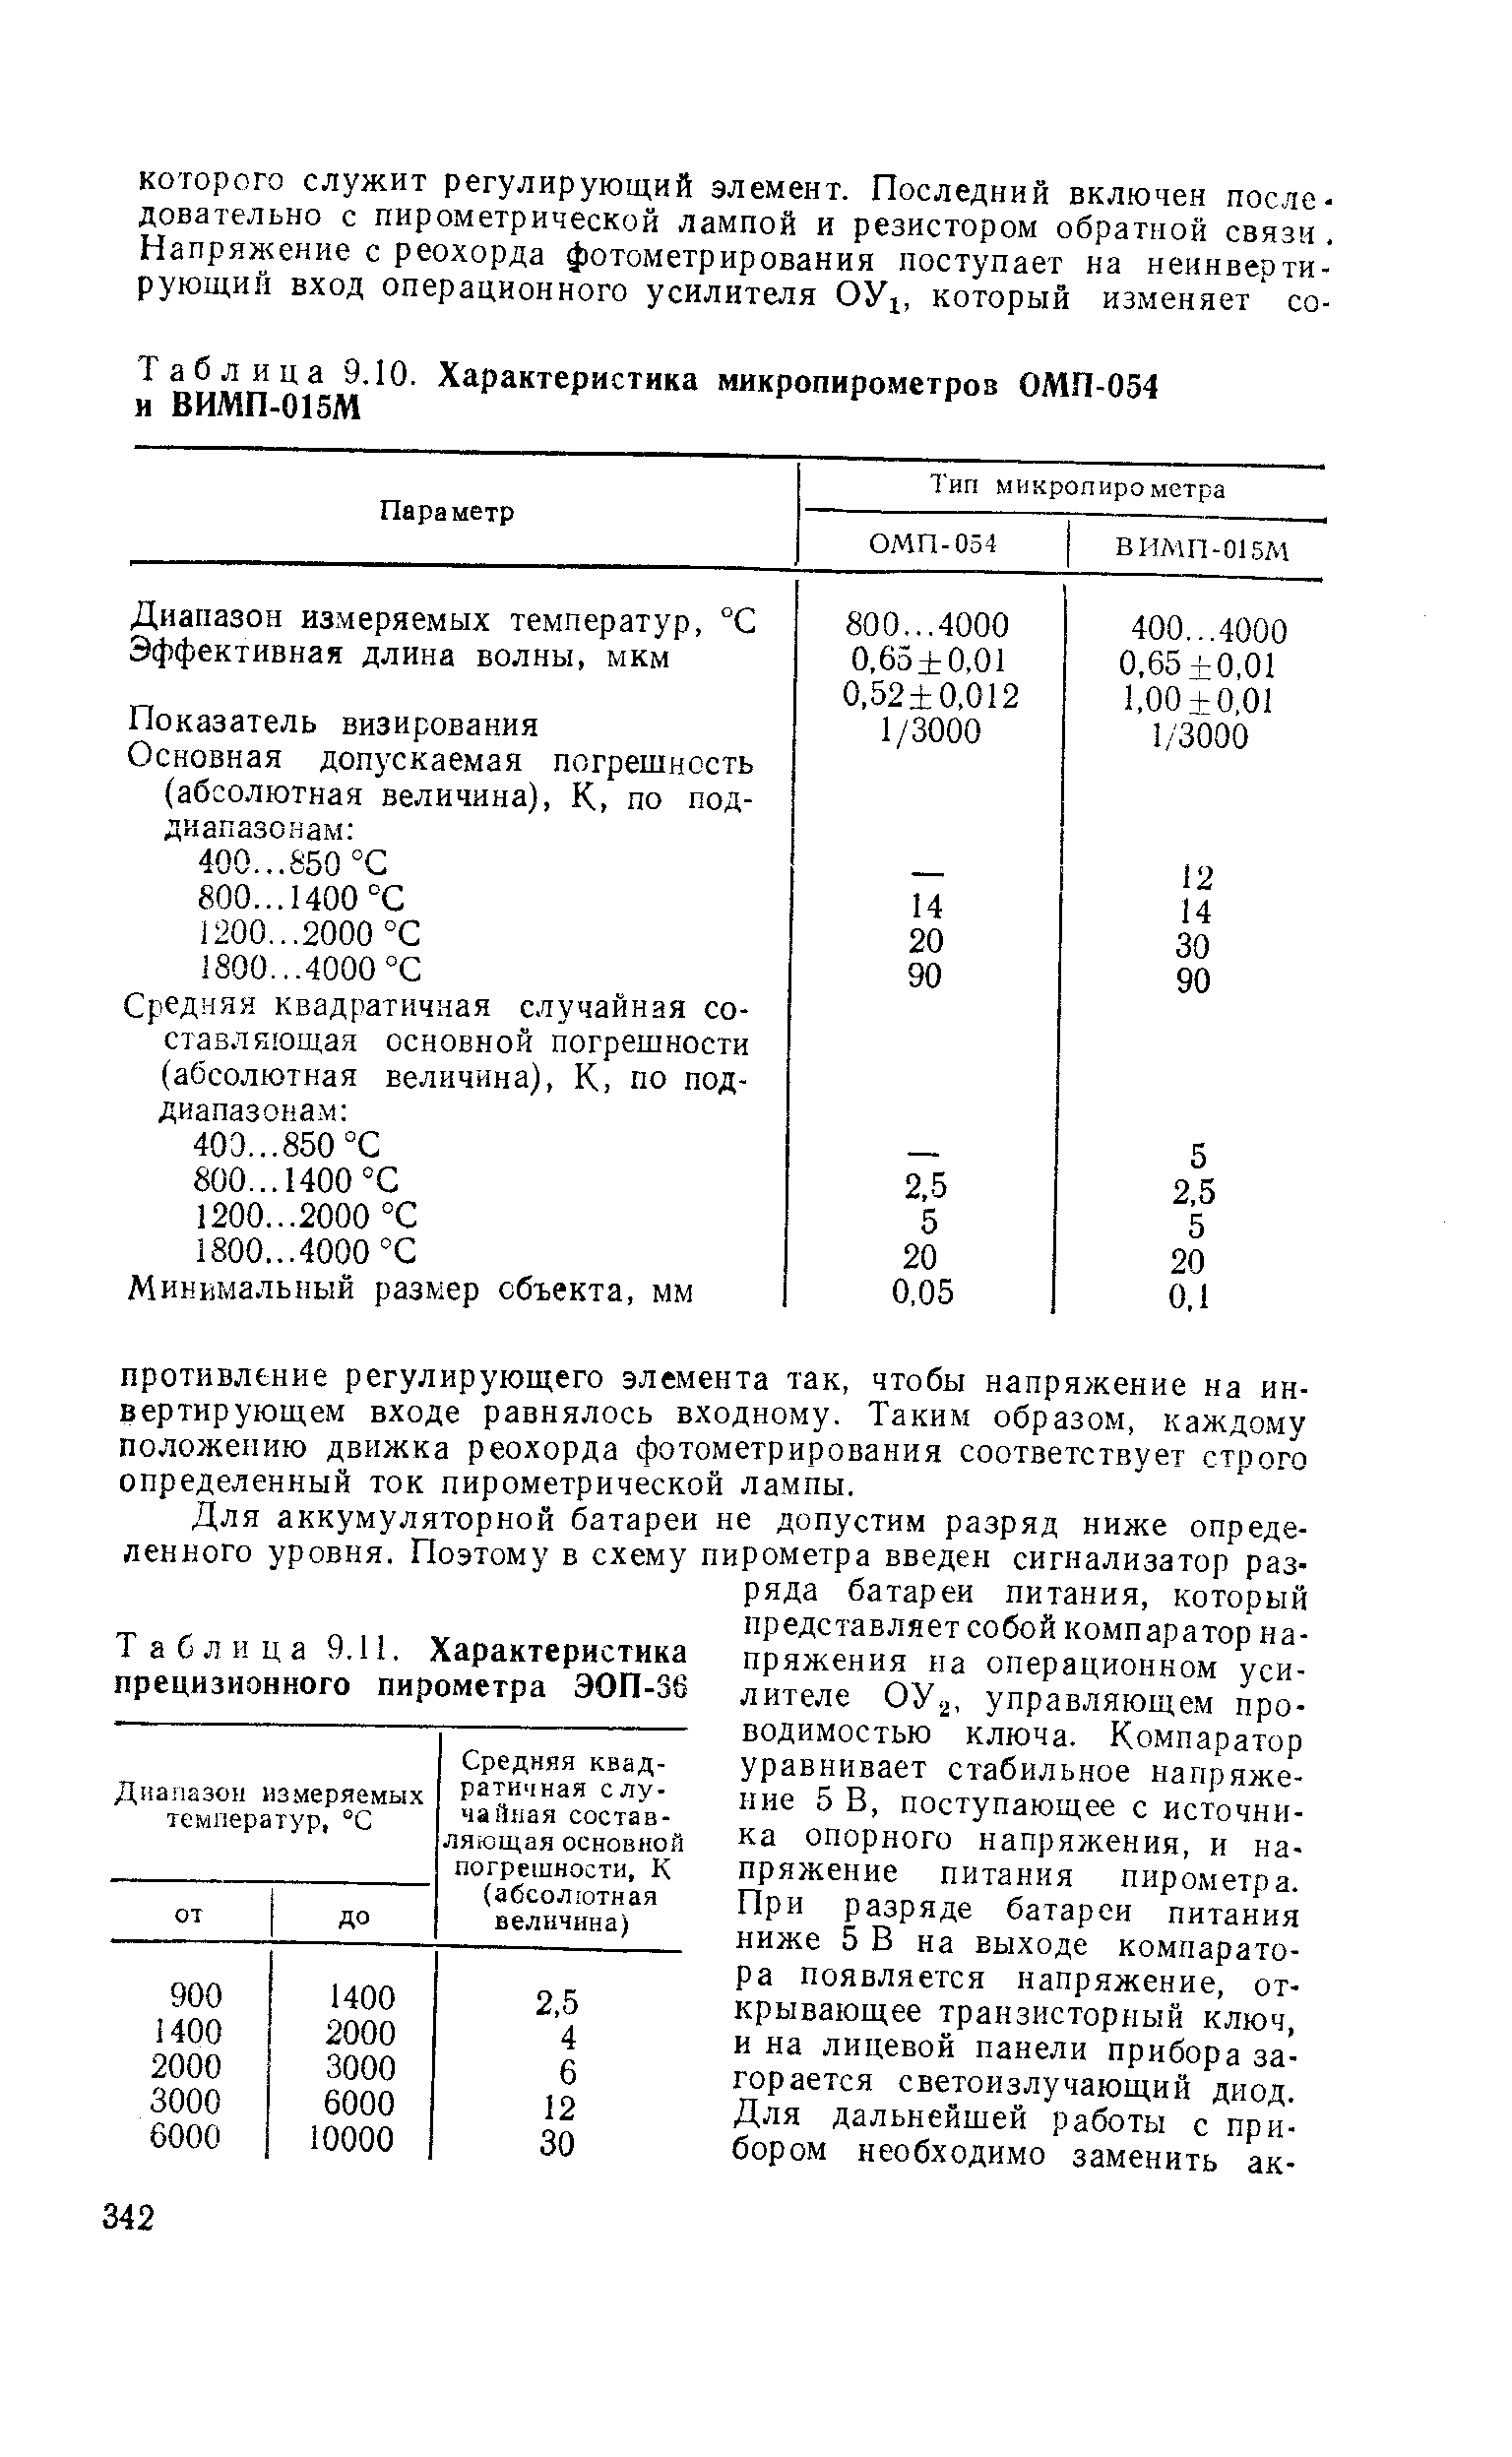 Таблица 9.11. Характеристика прецизионного пирометра ЭОП-36
